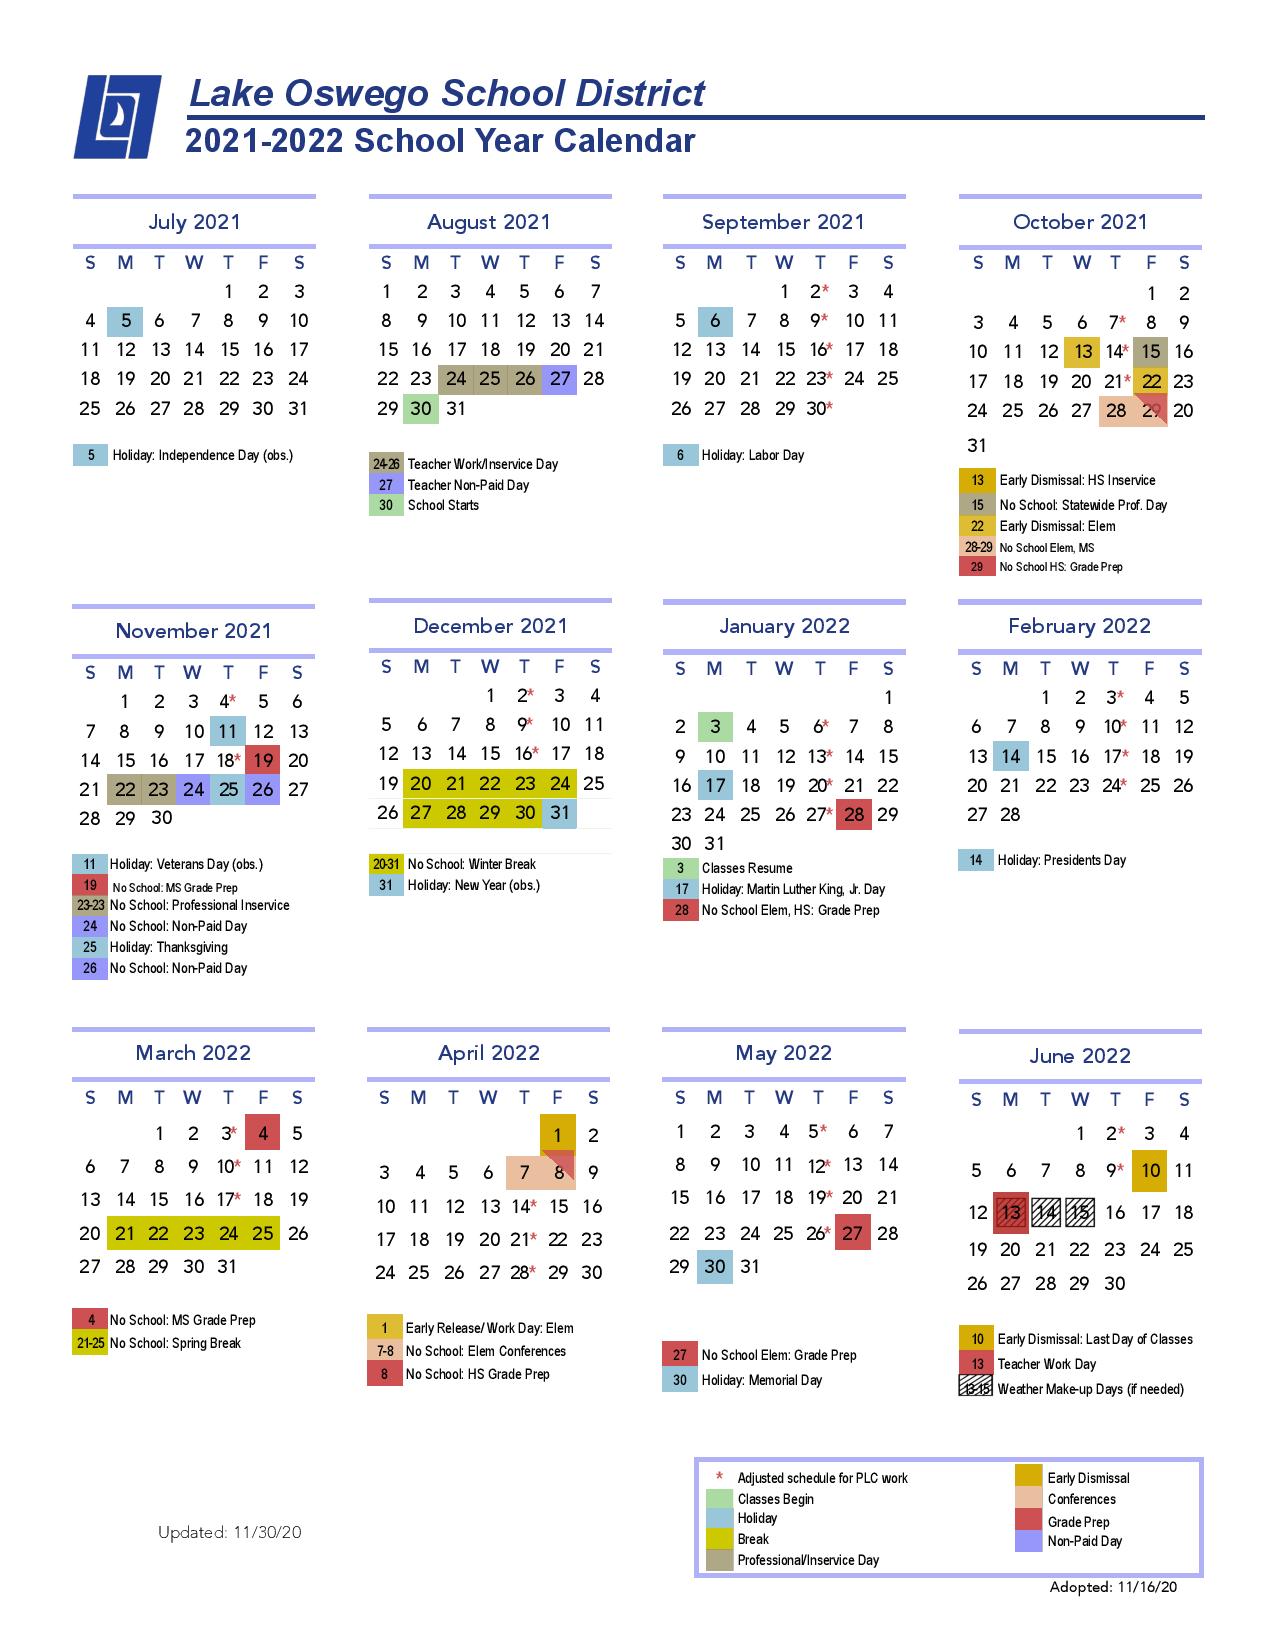 Lake Oswego School District Calendar 20212022 PDF